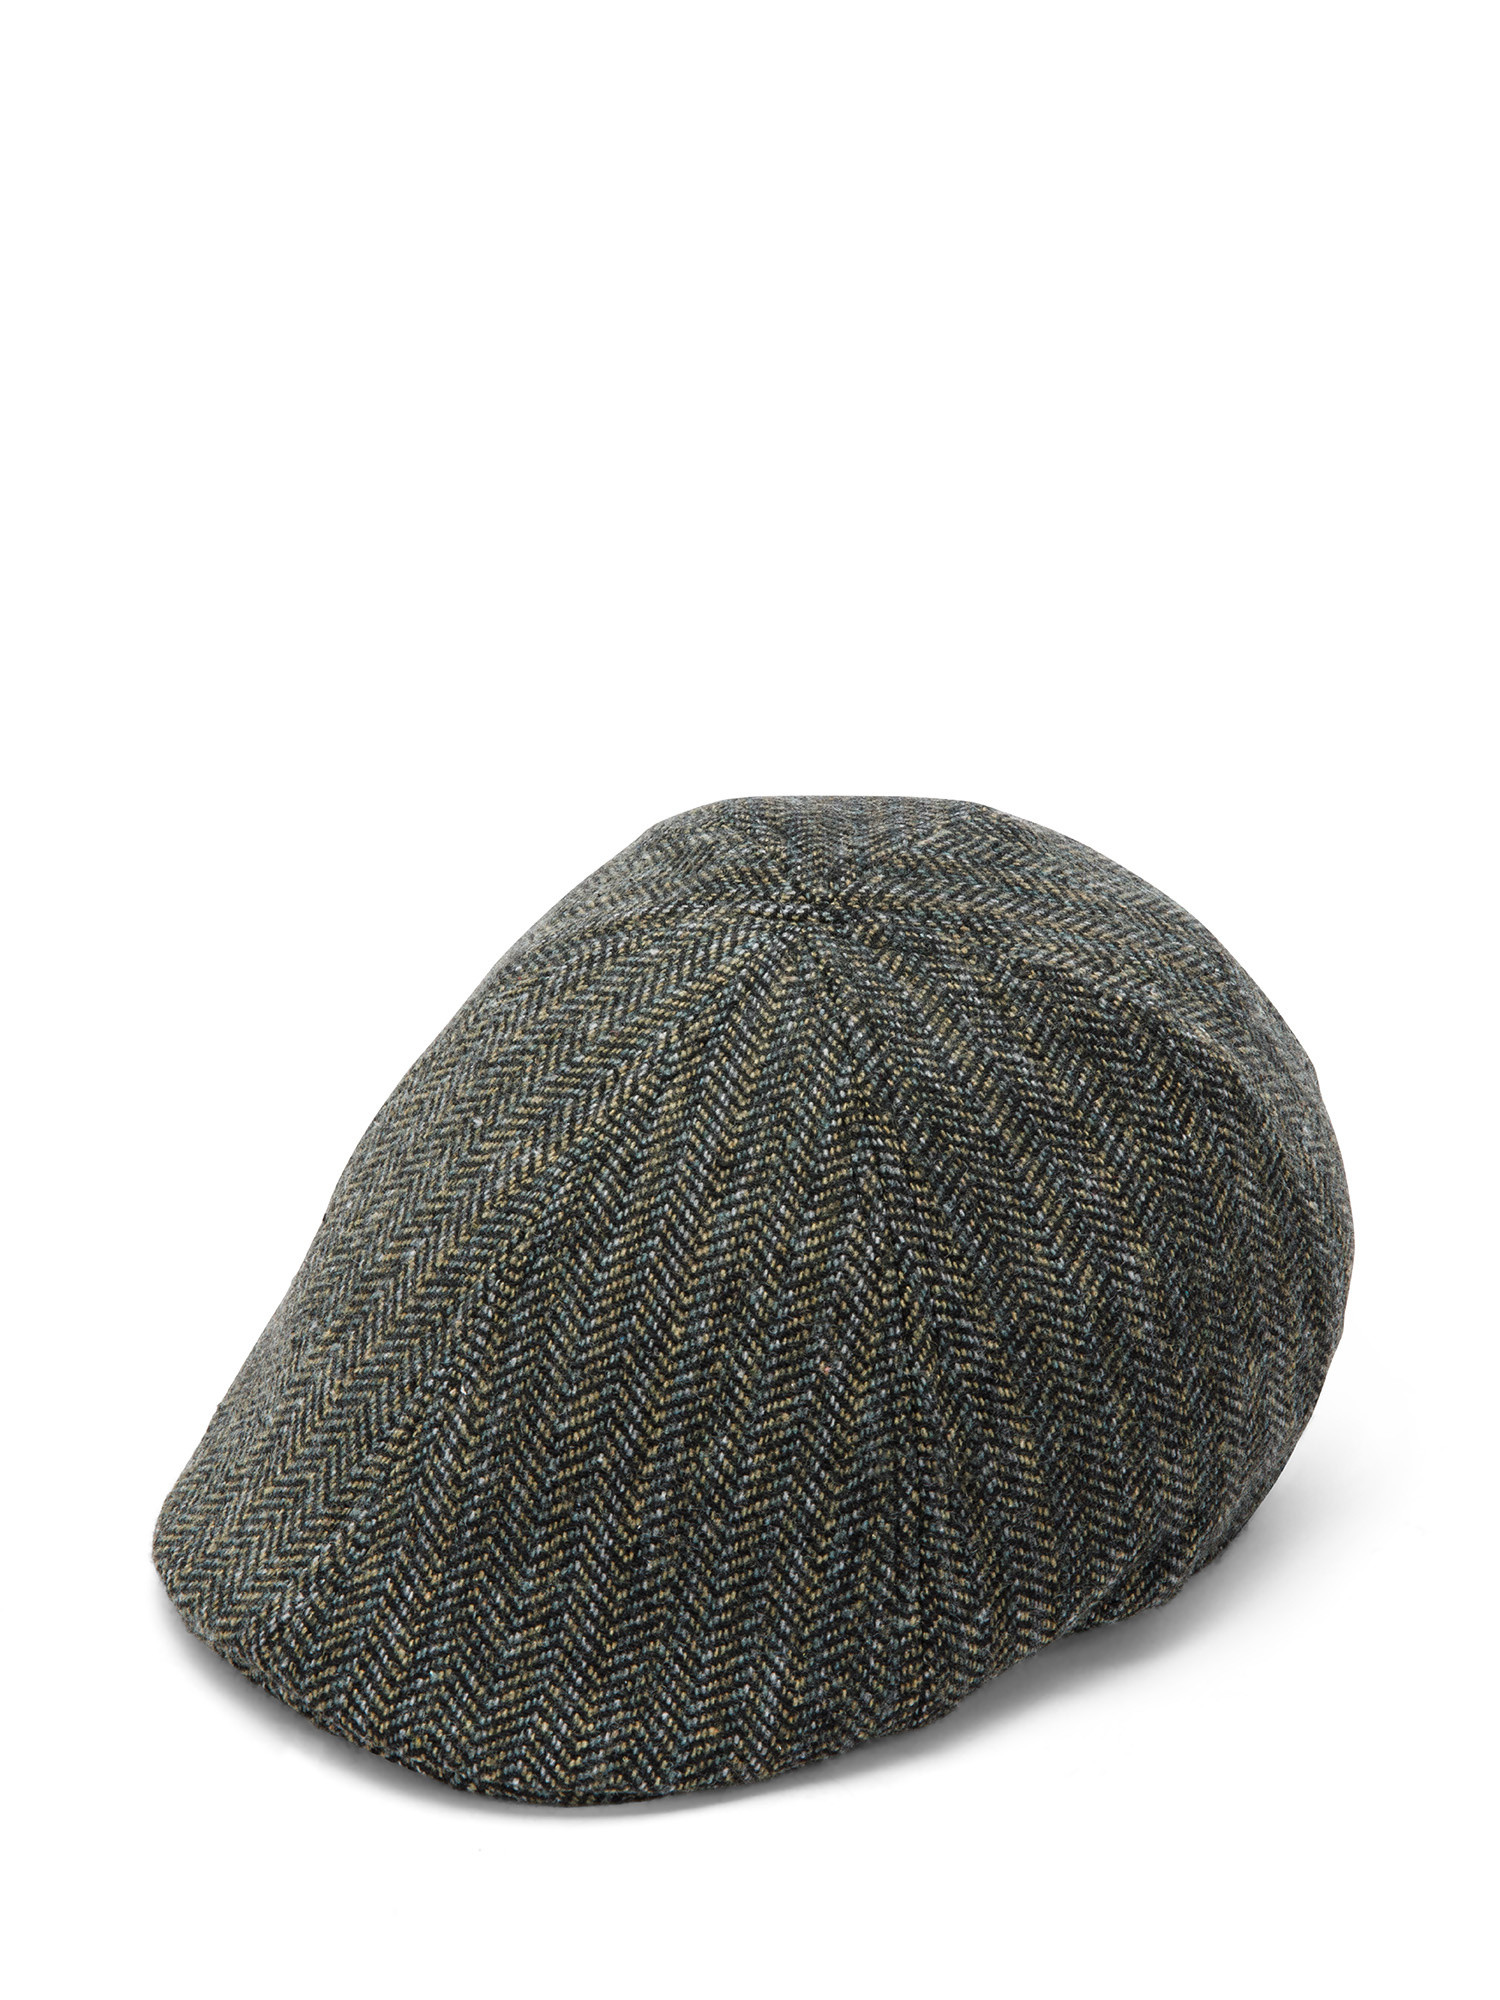 Luca D'Altieri - Flat cap in herringbone fabric, Olive Green, large image number 0